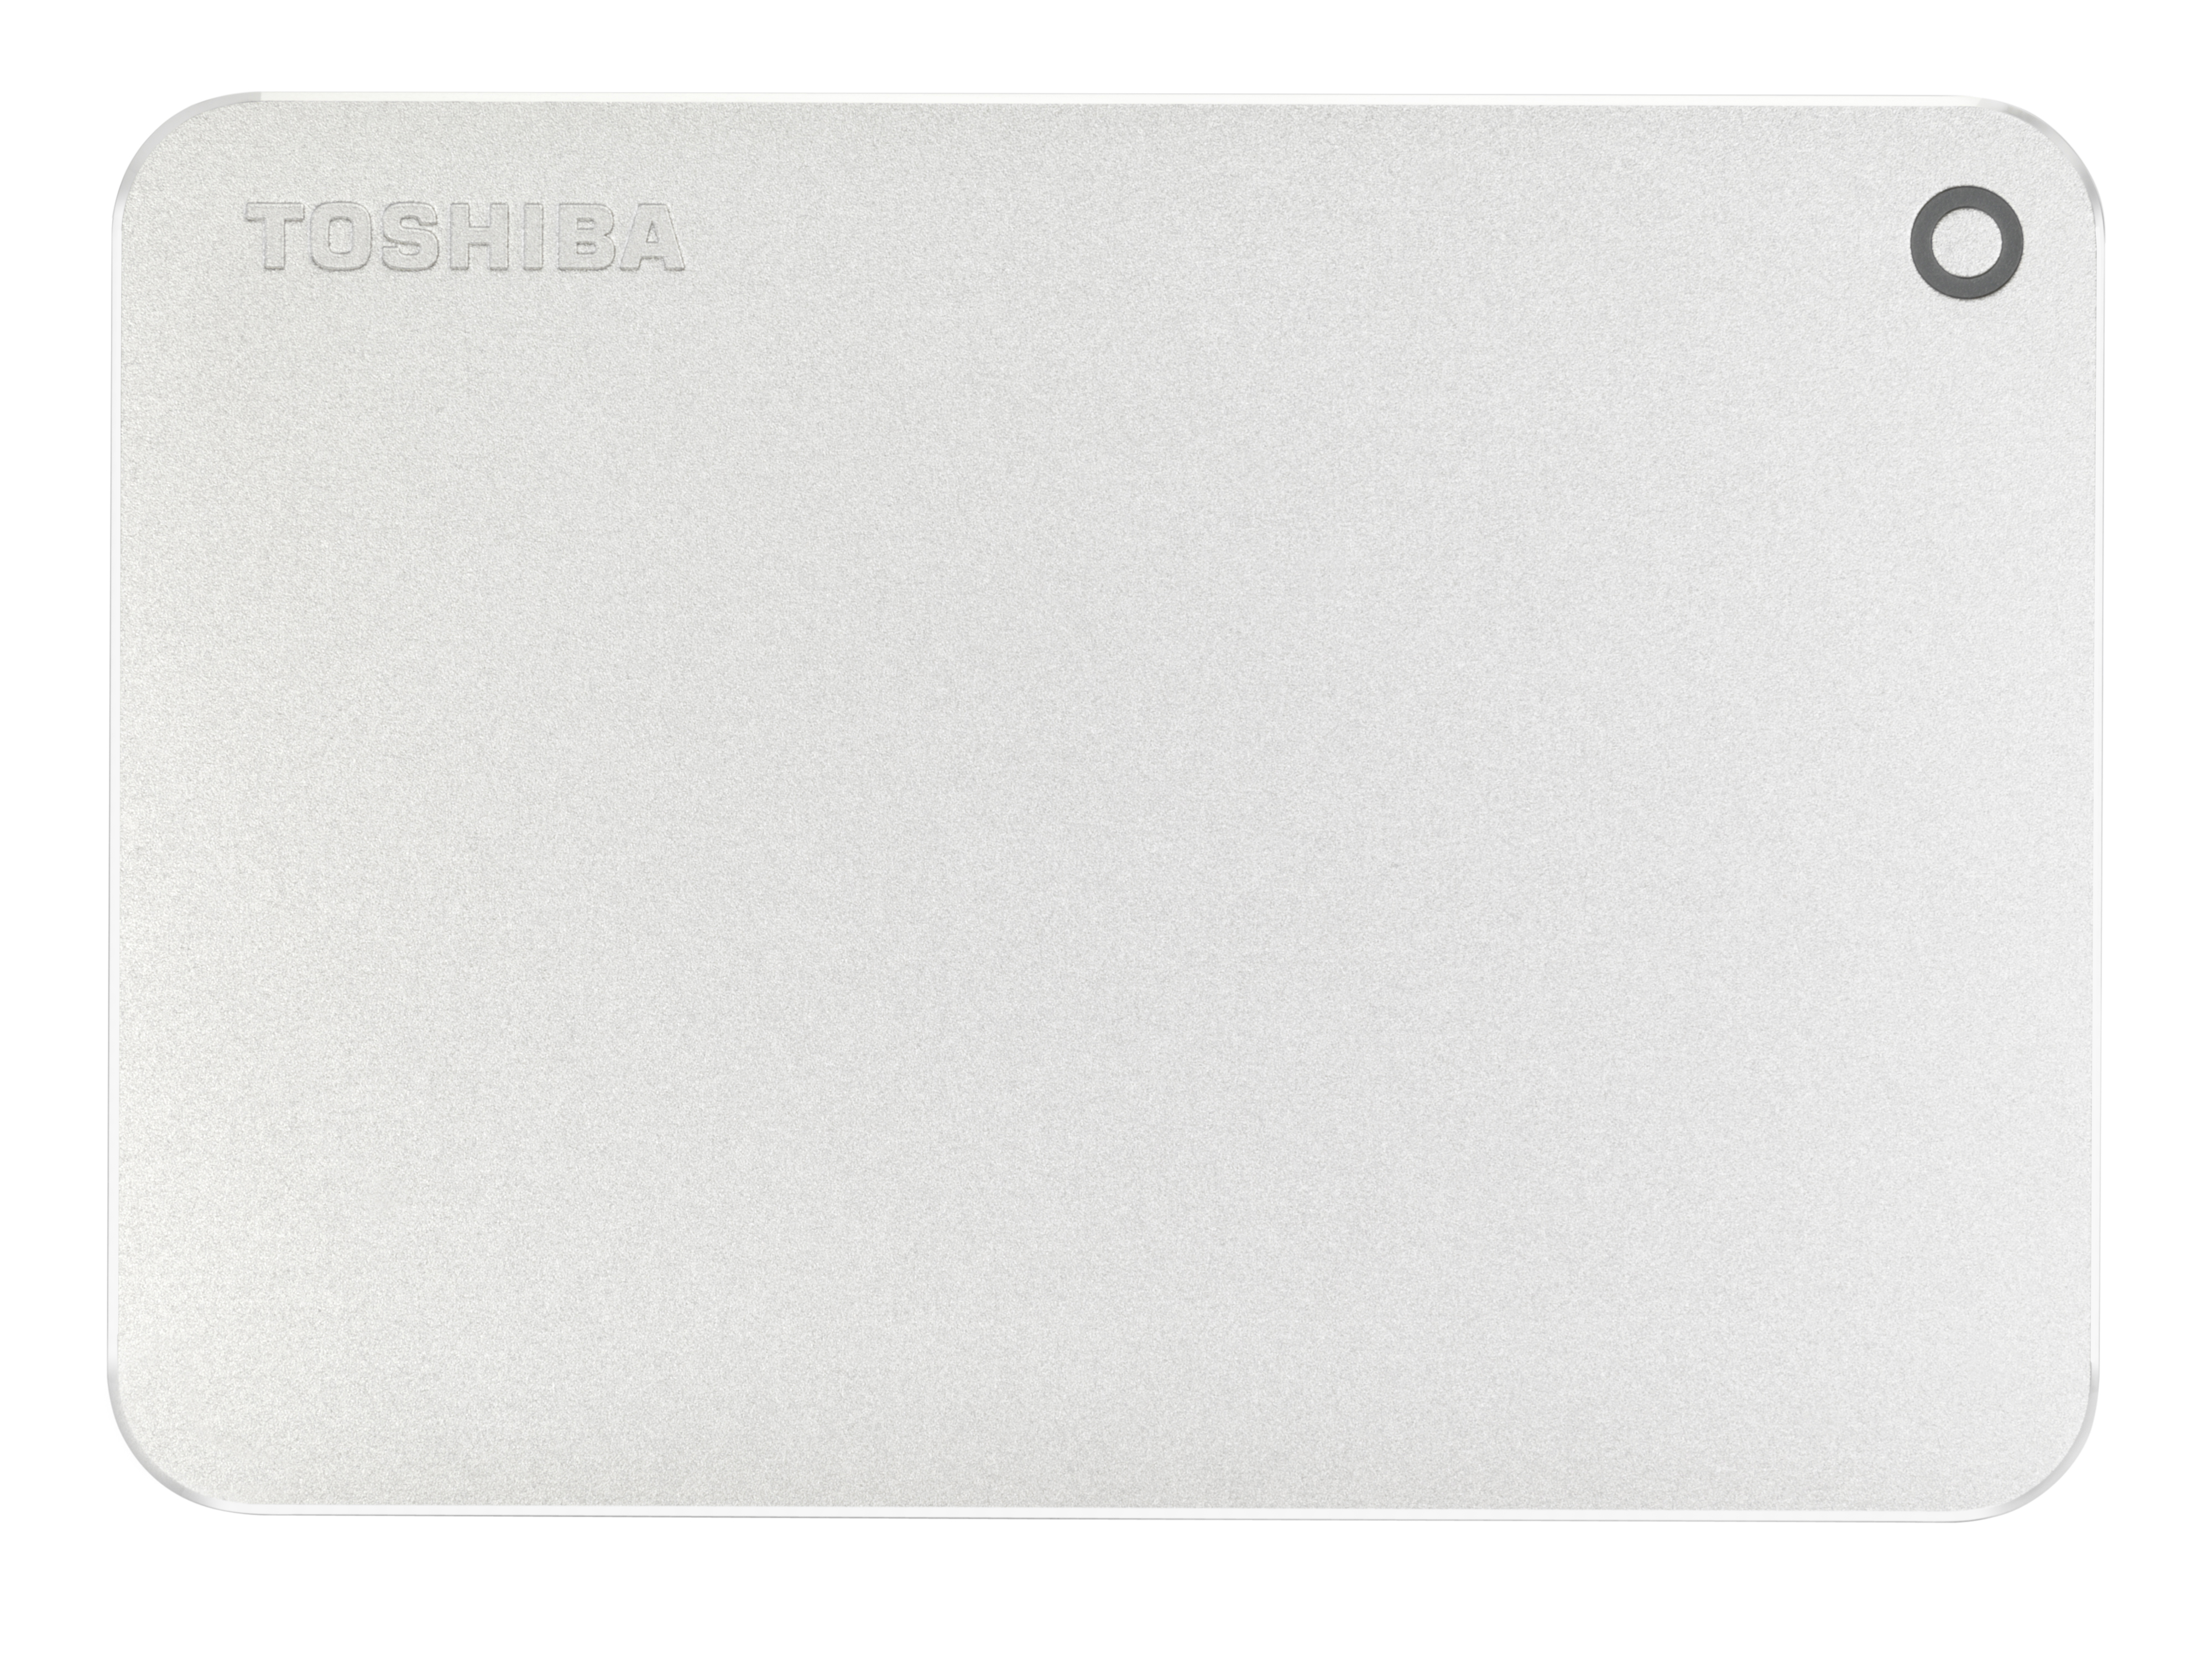 HDD, 1 extern, 2,5 TB Canvio Premium TOSHIBA Zoll, Silber Festplatte,